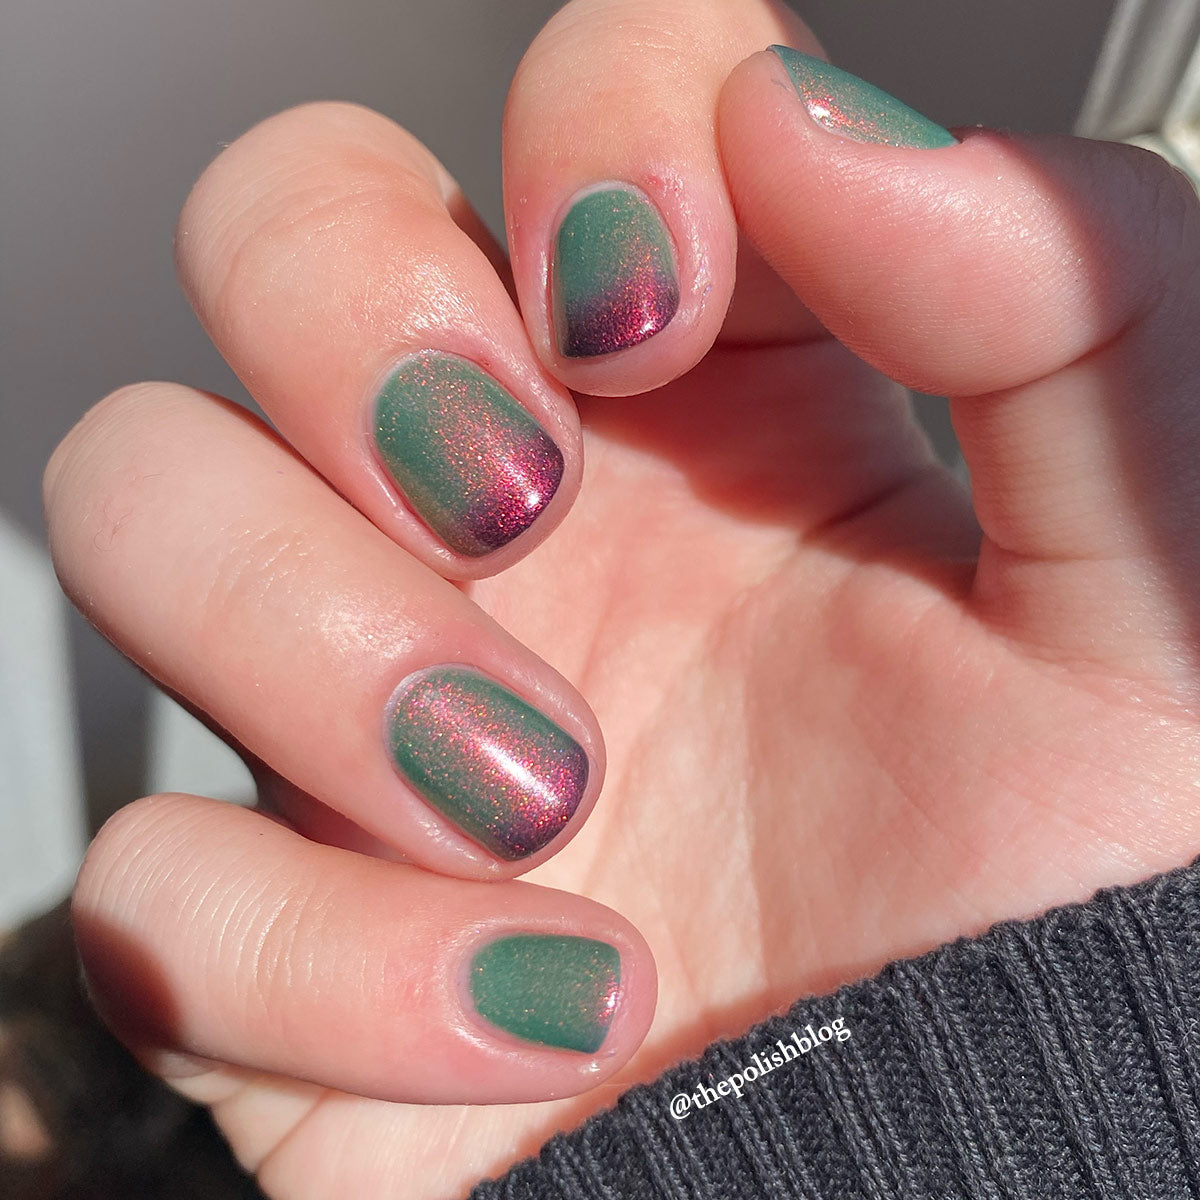 Thermal nail polish by Emily de Molly